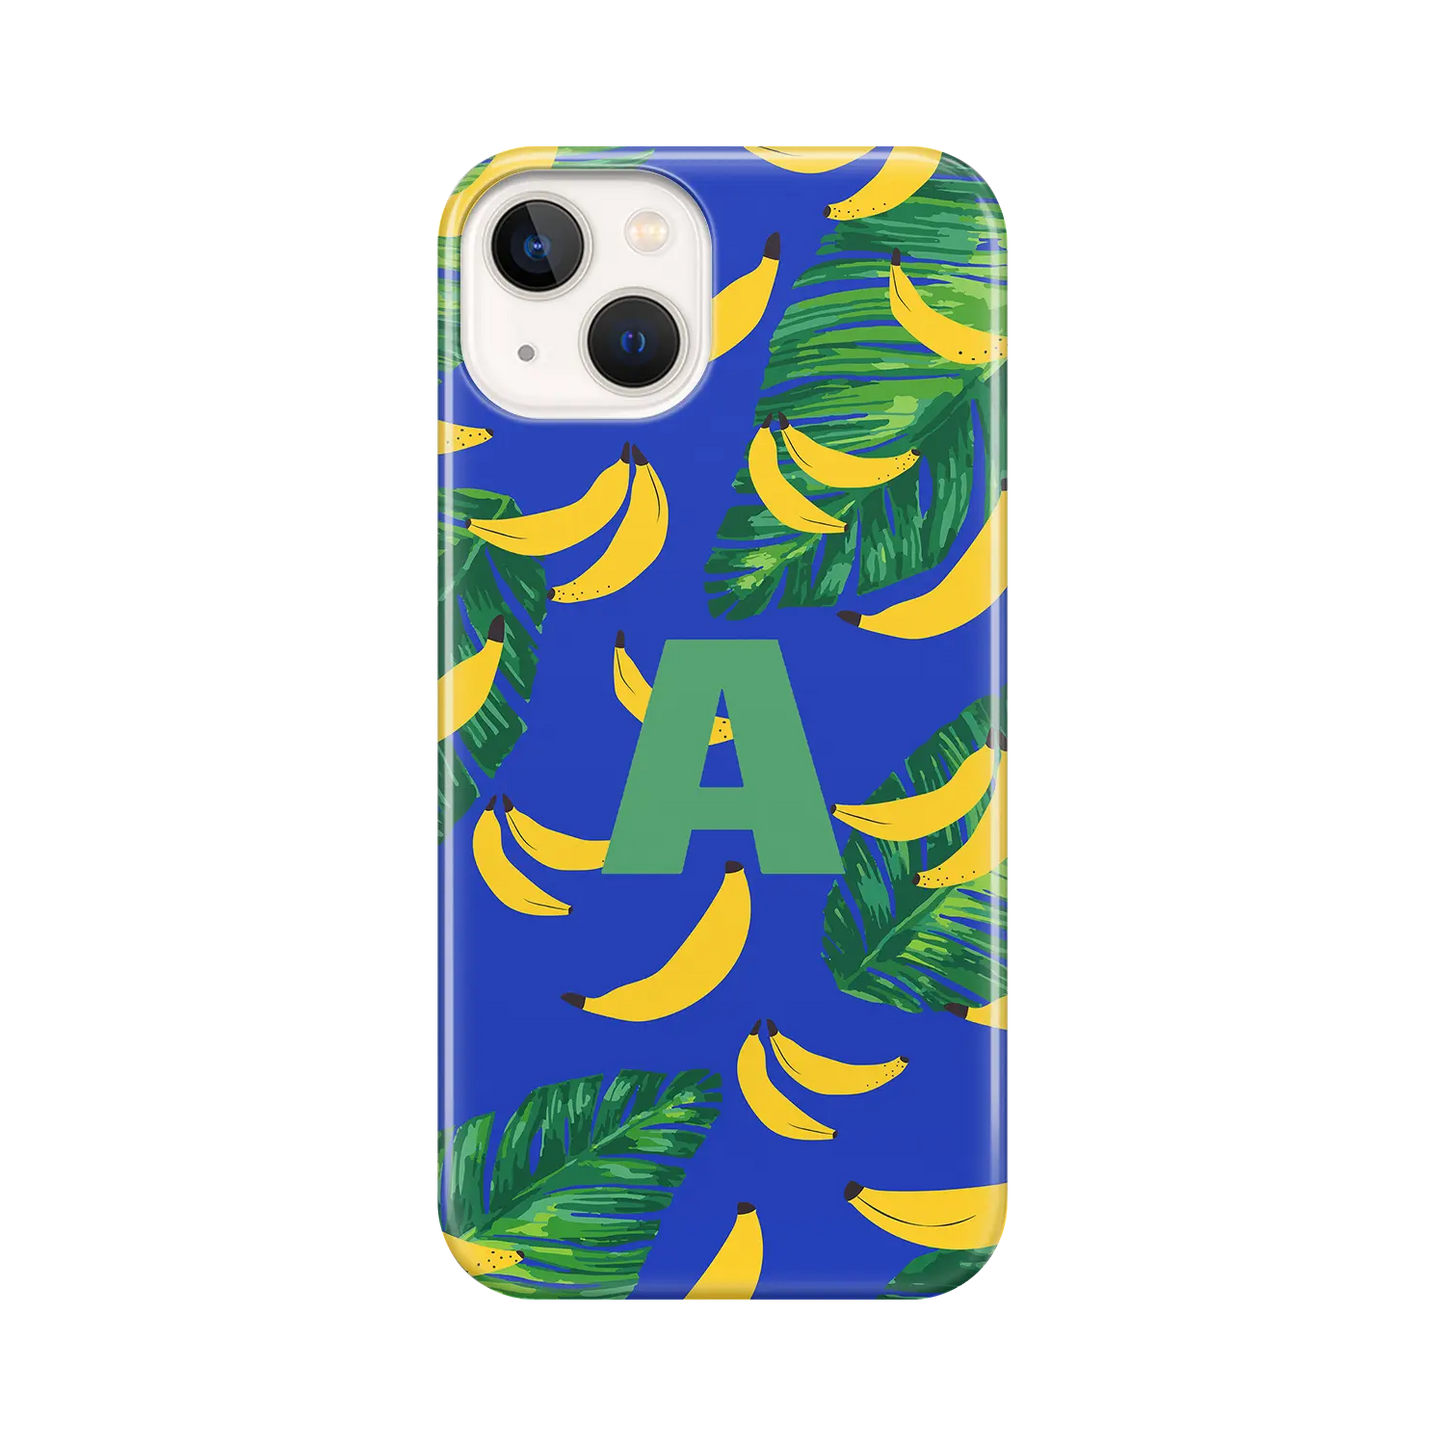 Going Bananas - Carcasa personalizada iPhone